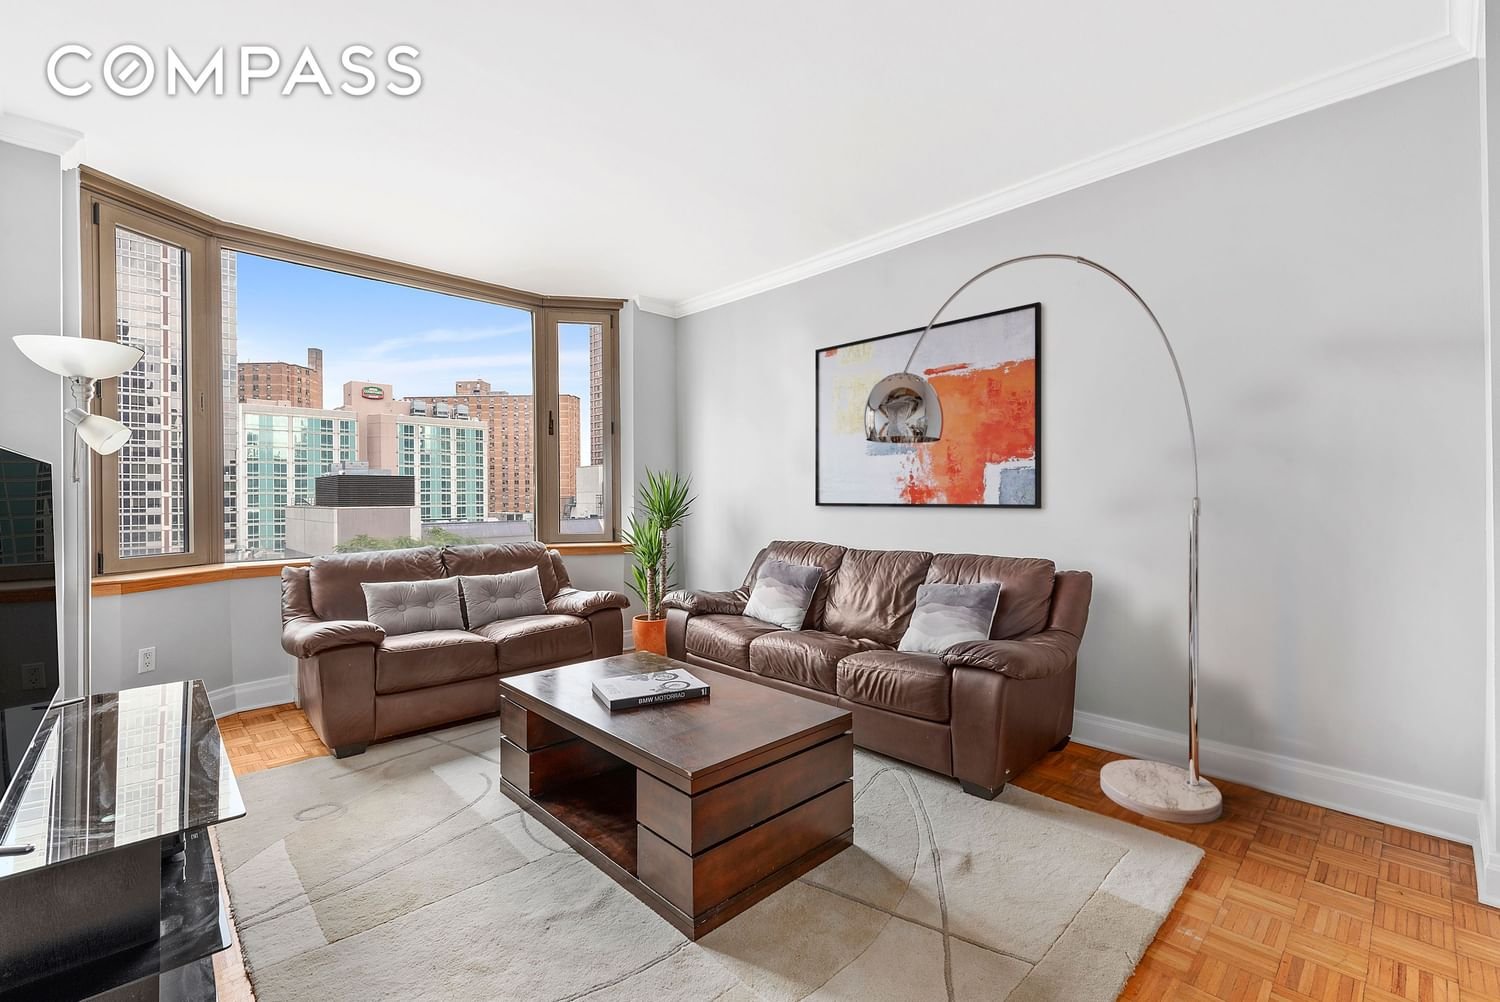 Real estate property located at 400 90th #8-E, New York, New York City, NY